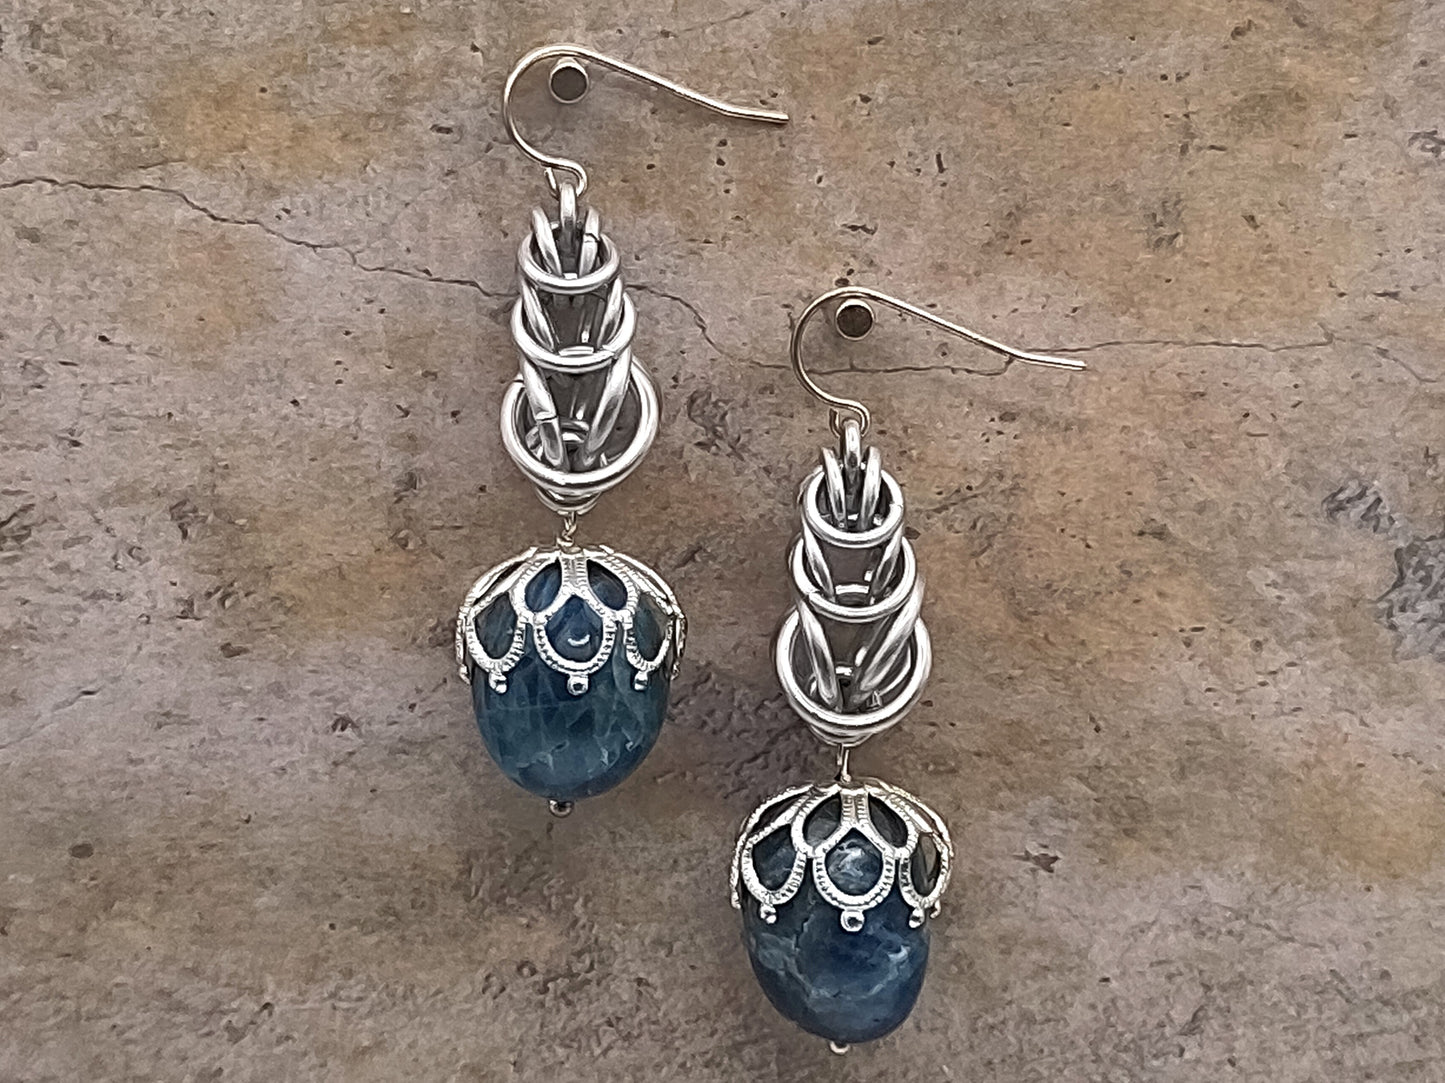 Faberge Inspired earrings